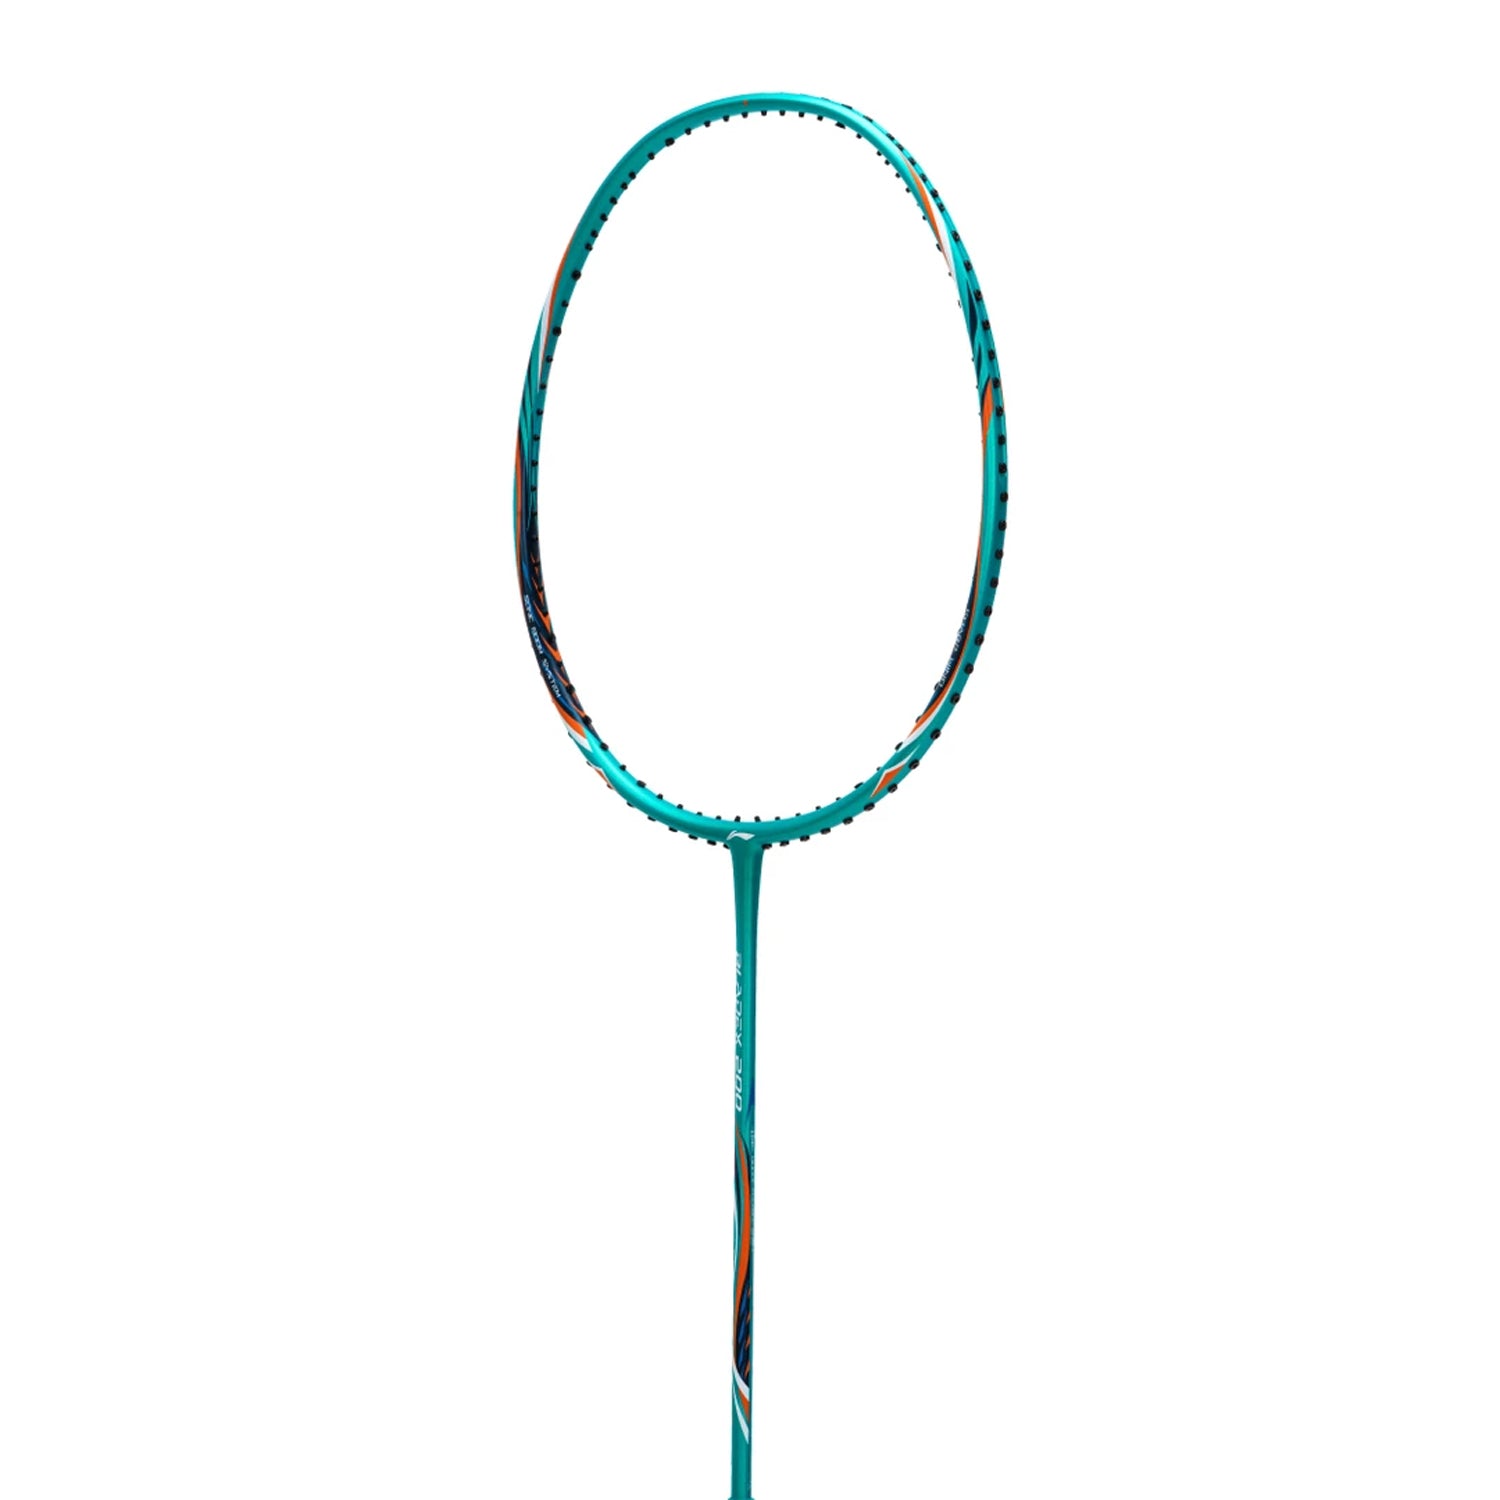 Li-Ning Bladex 200 Unstrung Badminton Racquet, Blue - Best Price online Prokicksports.com